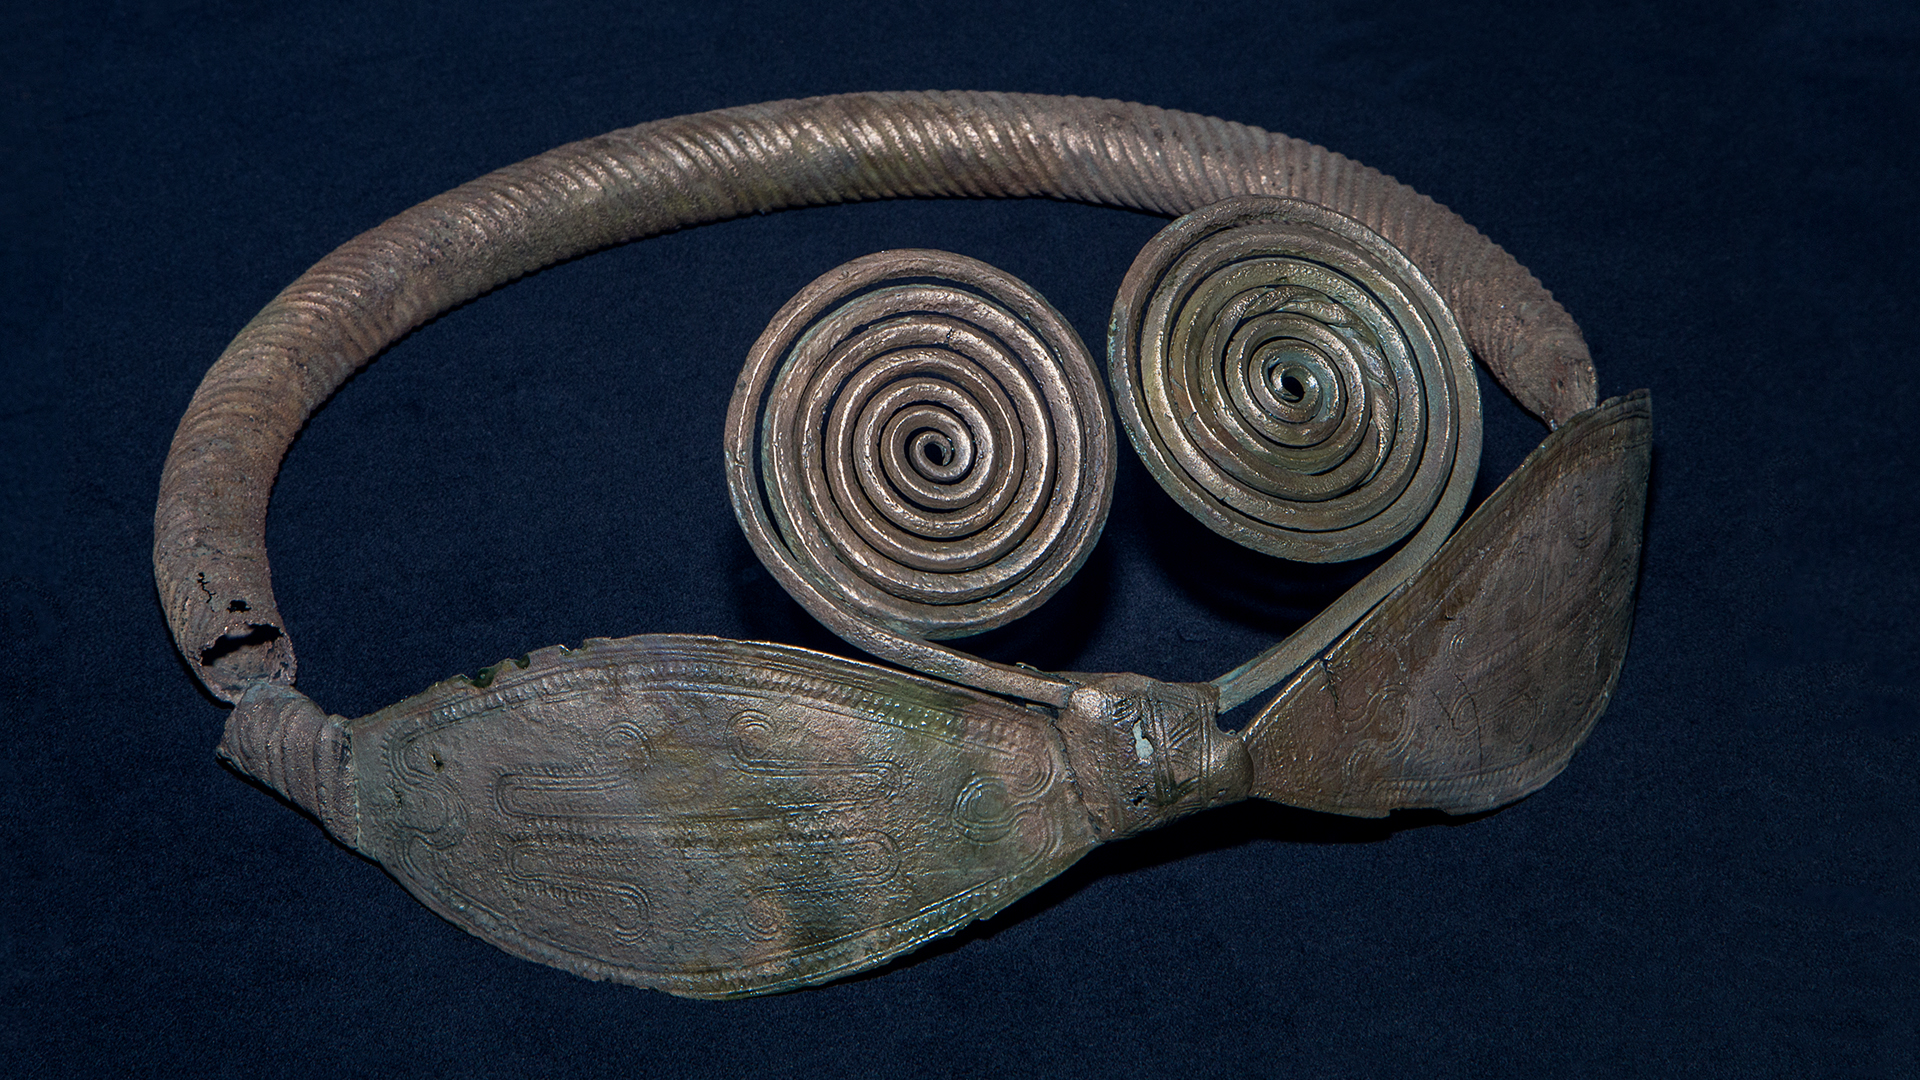 En halskrage i brons- Gammalt museiföremål.